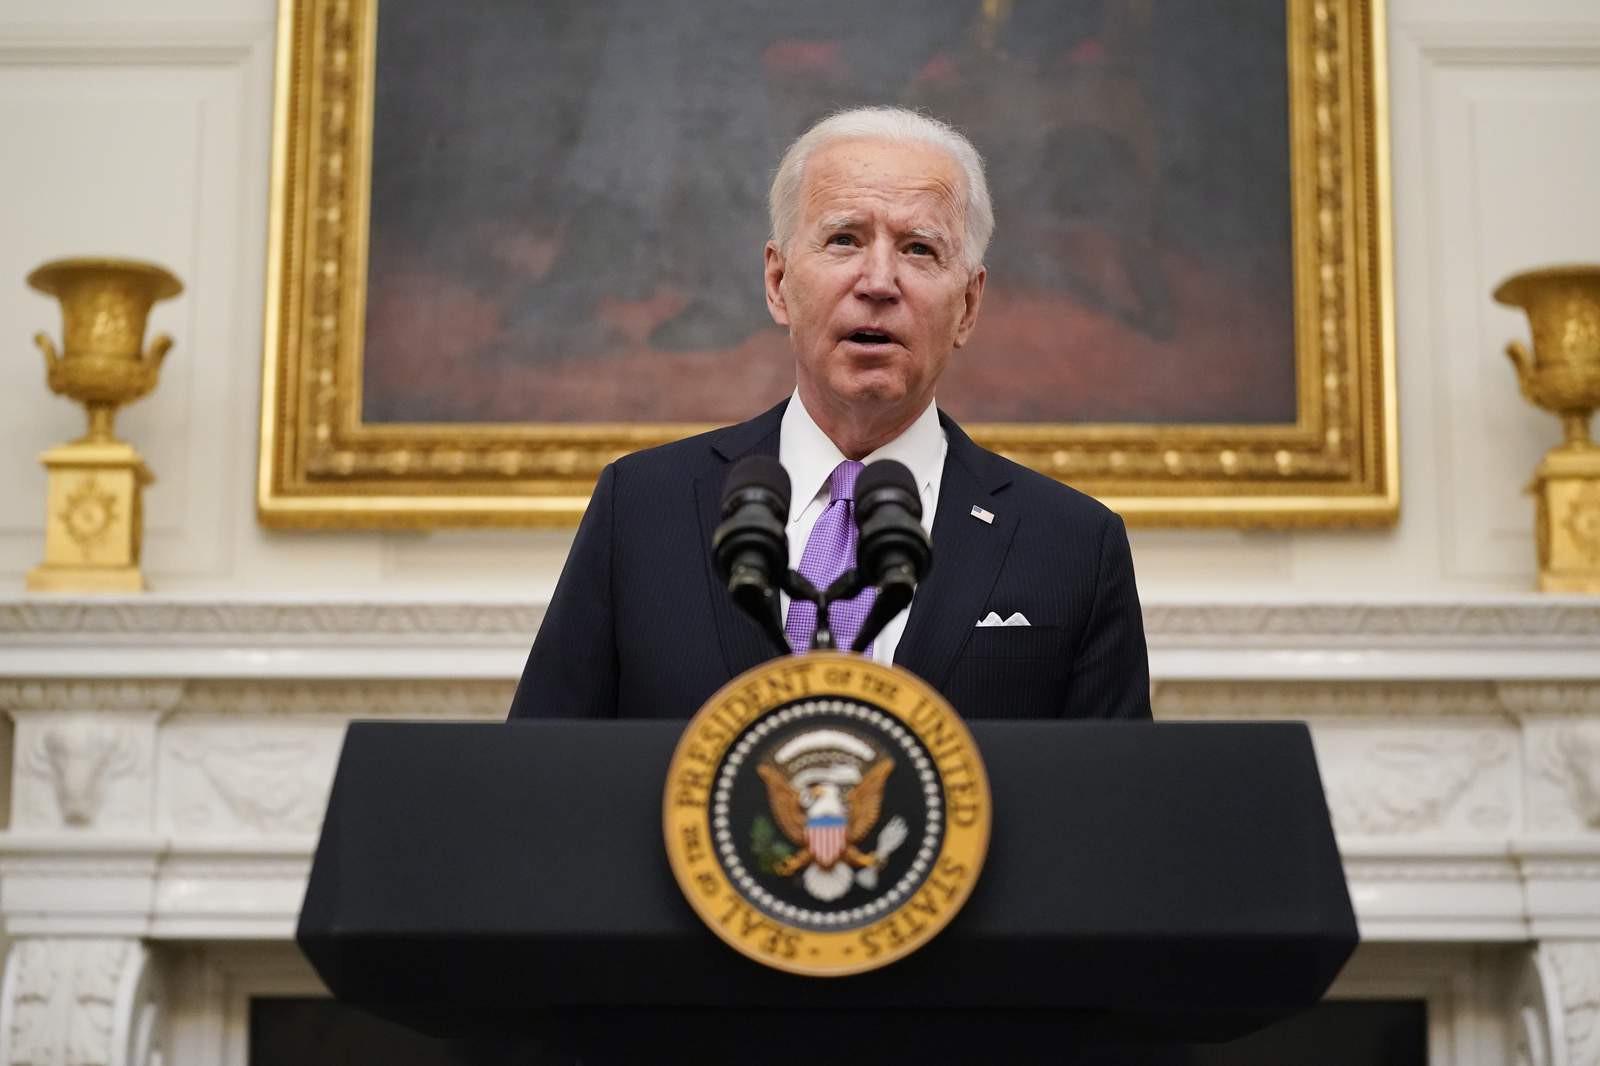 President Biden introduces new COVID-19 response plan